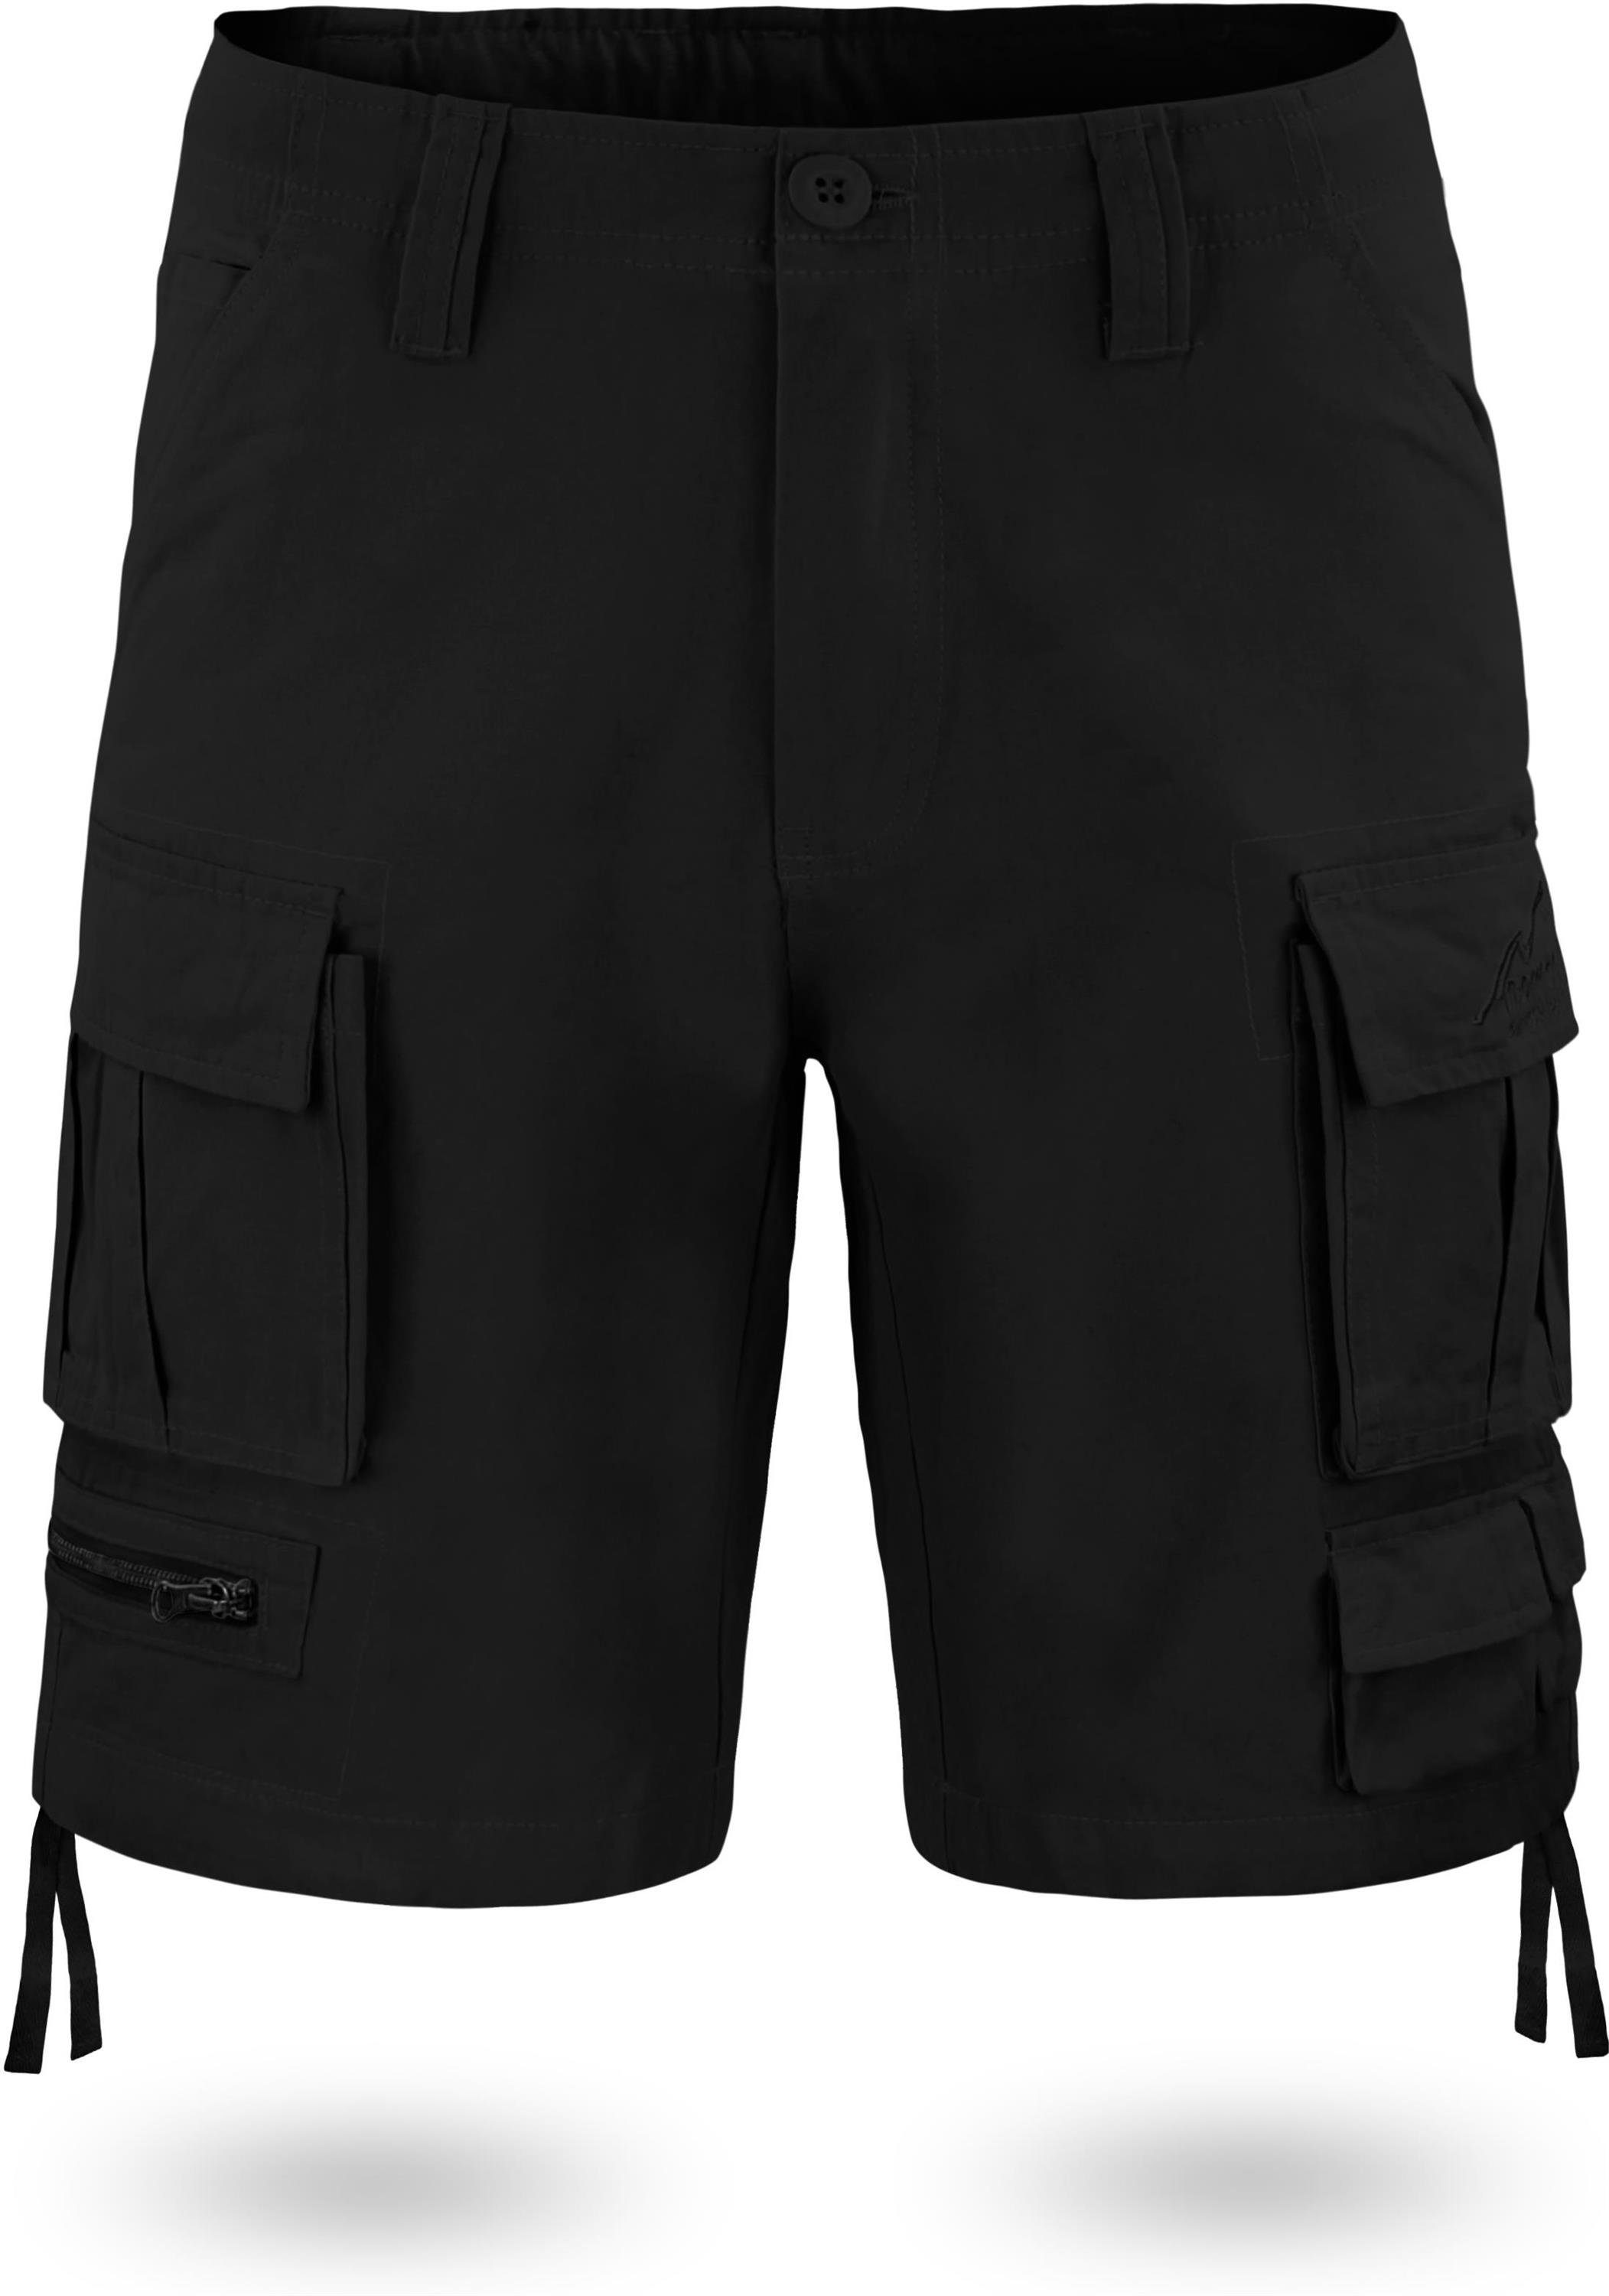 normani Bermudas Herren Shorts Atacama Vintage Shorts kurze Sommershorts Cargoshorts aus 100% Bio-Baumwolle Schwarz